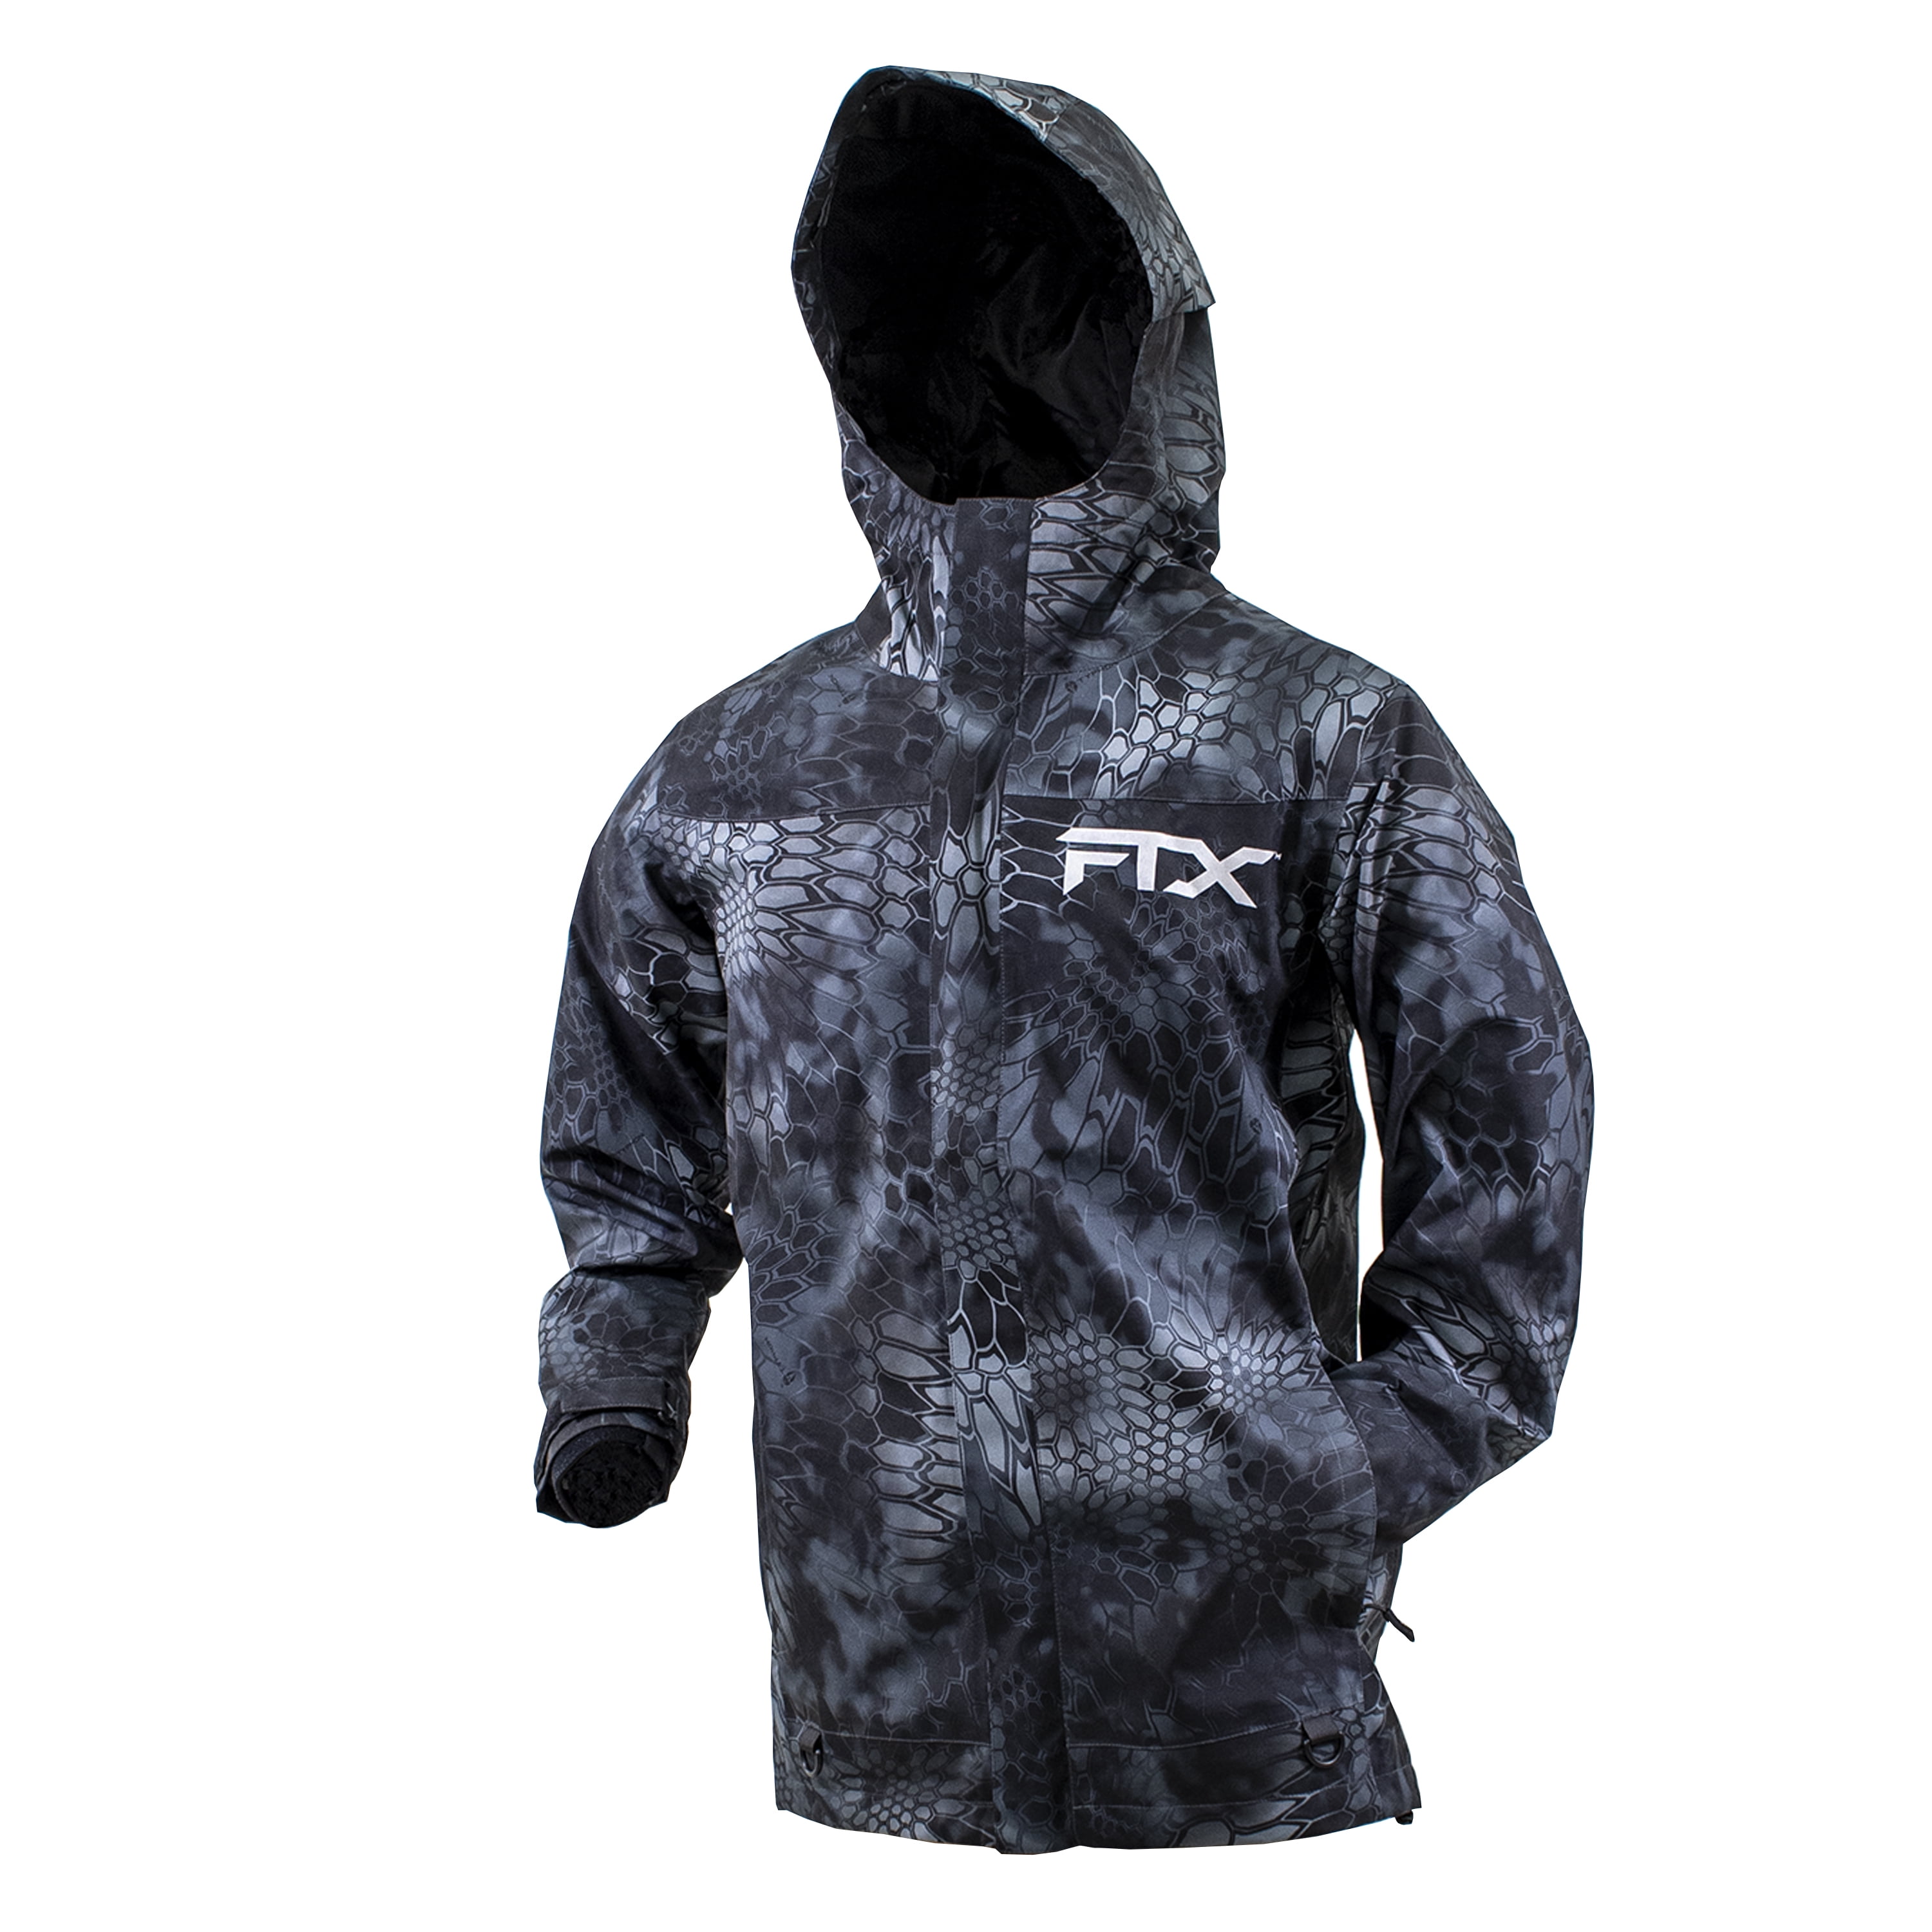 Frogg Toggs Men's FTX Armor Rain Jacket, Kryptek Typhon, Size LG 